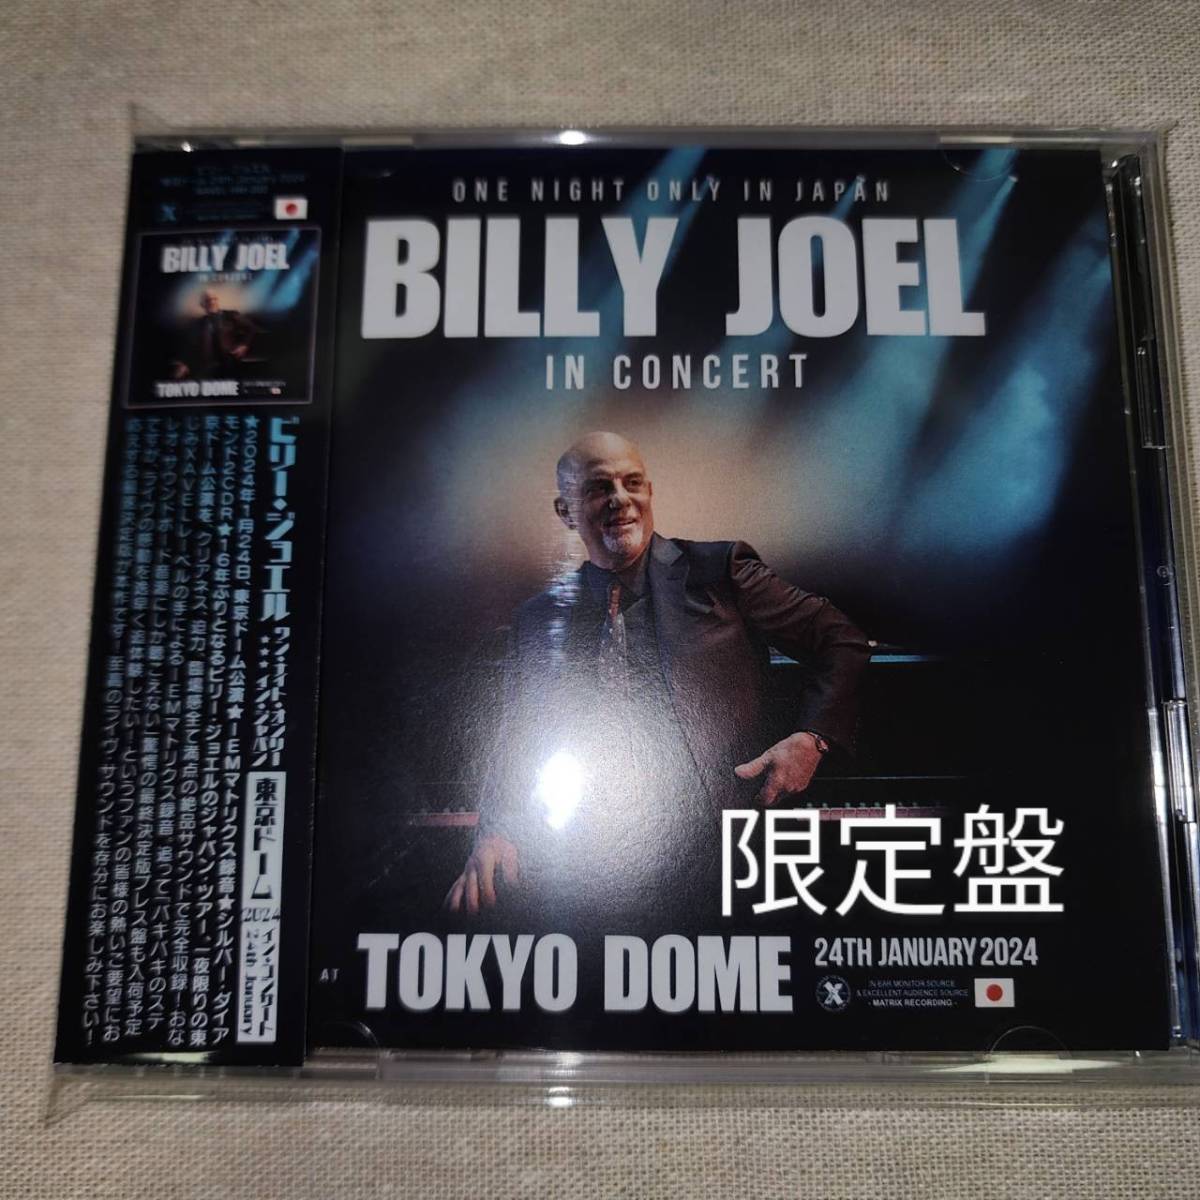 Billy Joel (2CD＋ボーナス) At Tokyo Dome 24th January 2024 限定盤 ◆XAVELレーベル◆_画像1